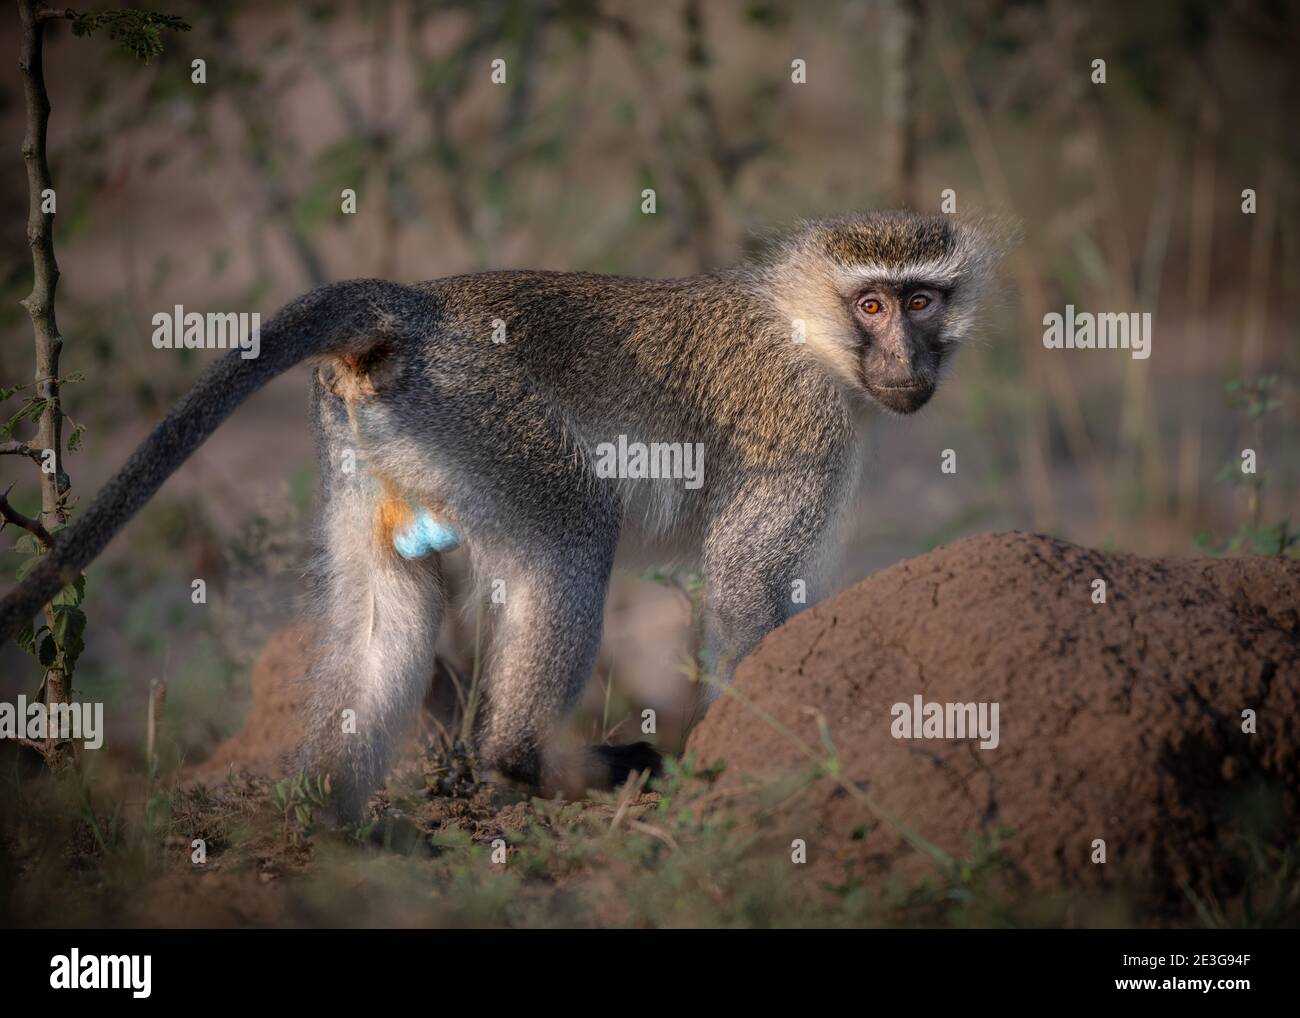 Wild Vervet Monkey in Africa. Stock Photo